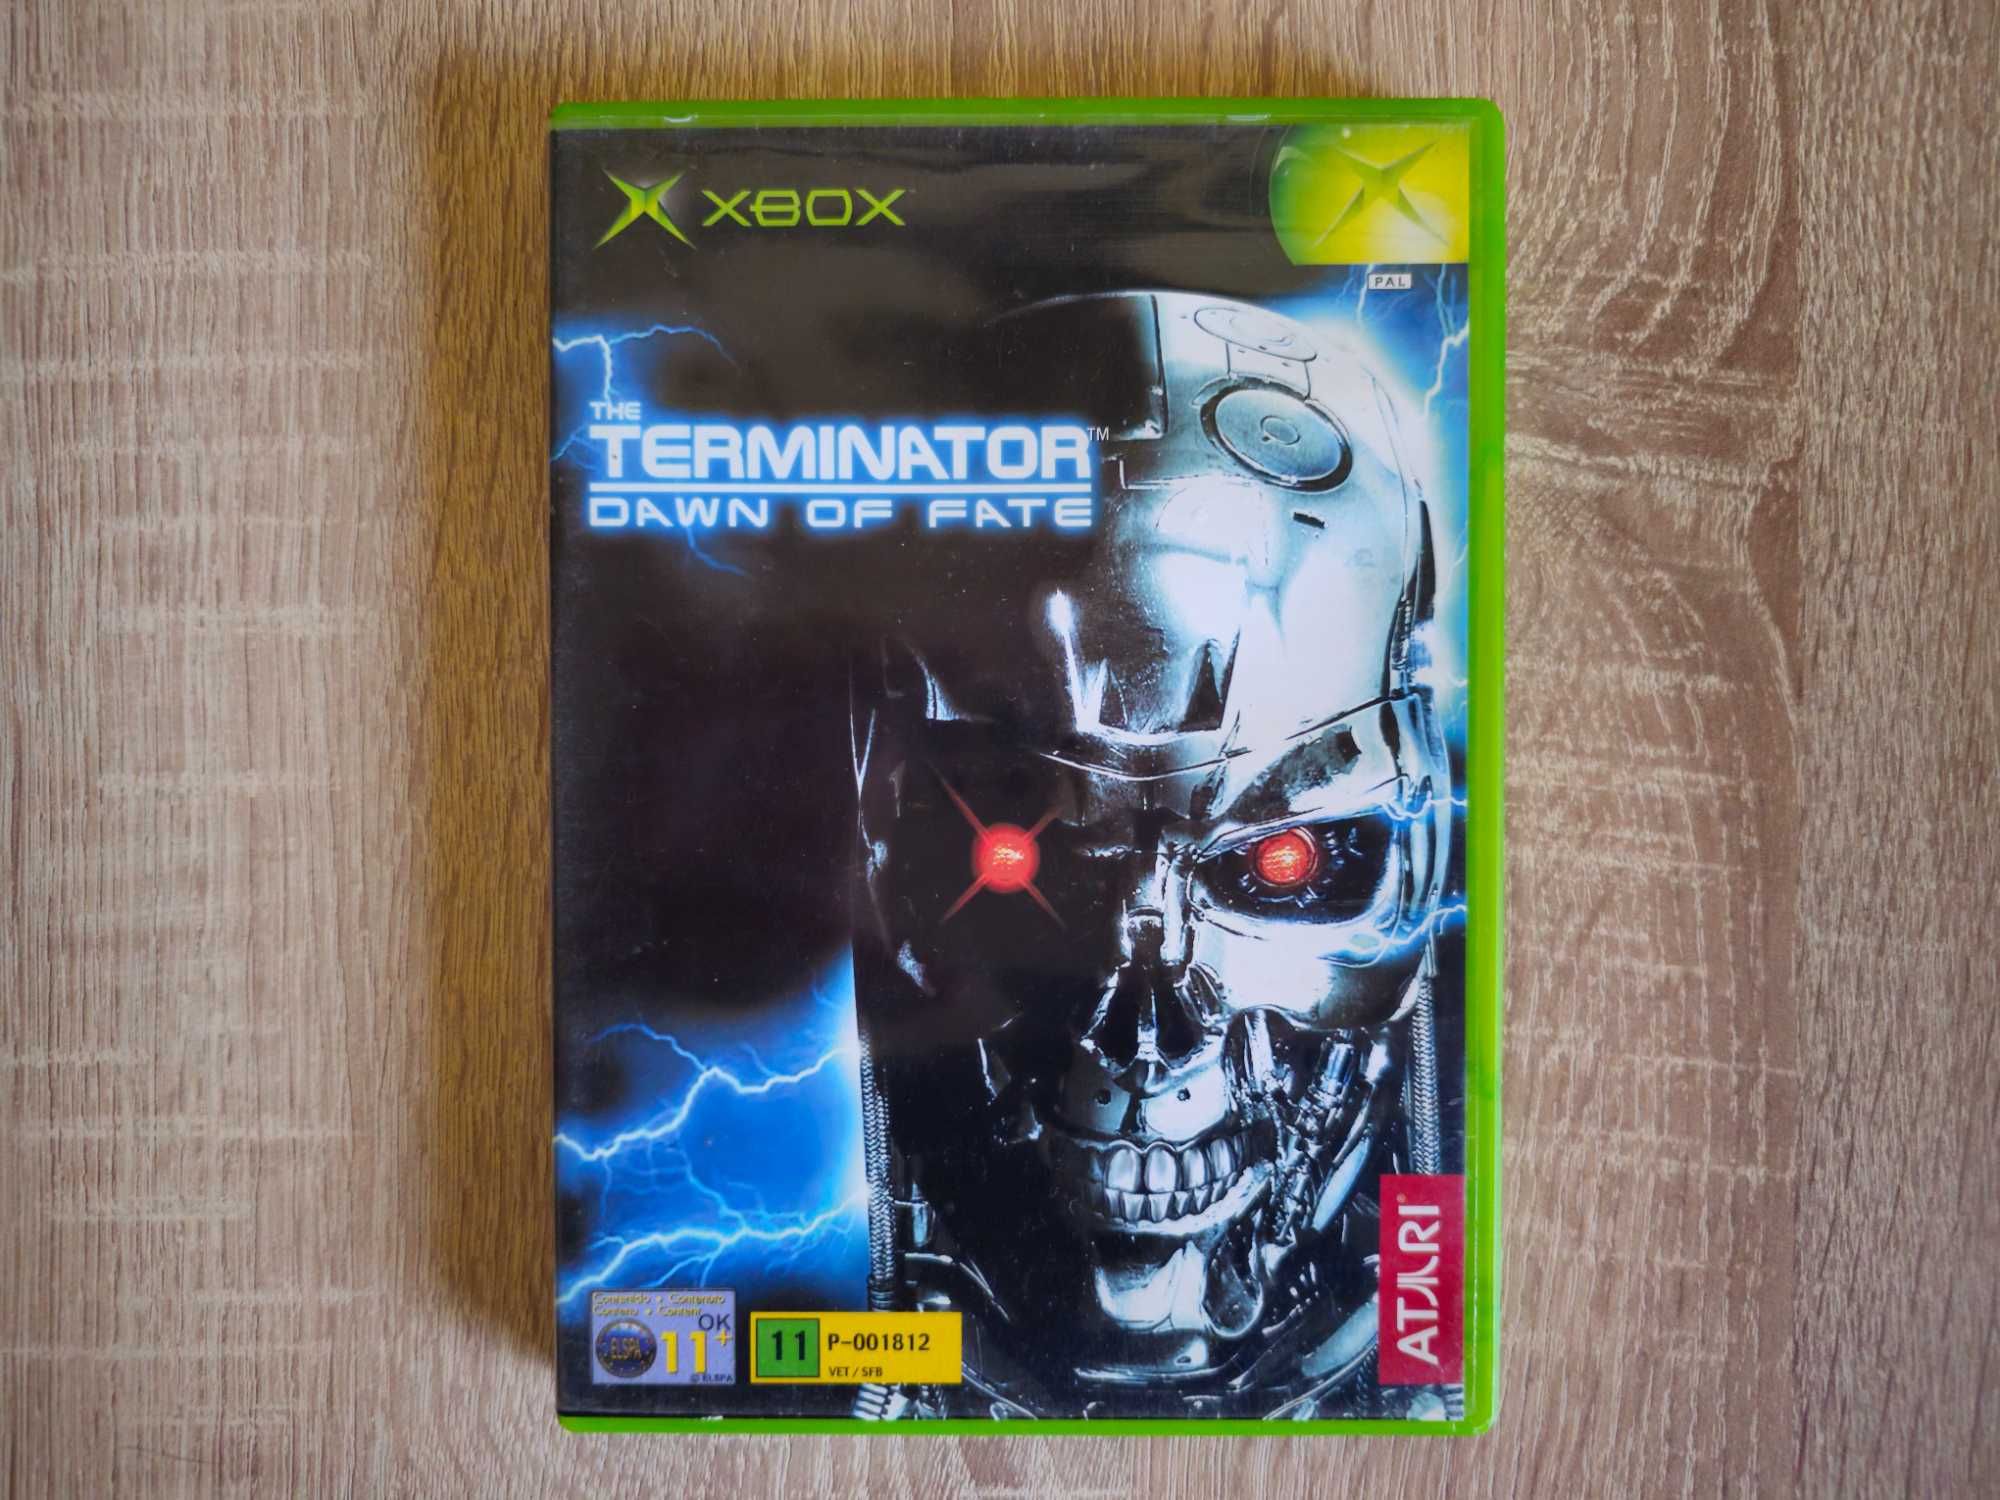 The Terminator Dawn of Fate за XBOX Classic/Original